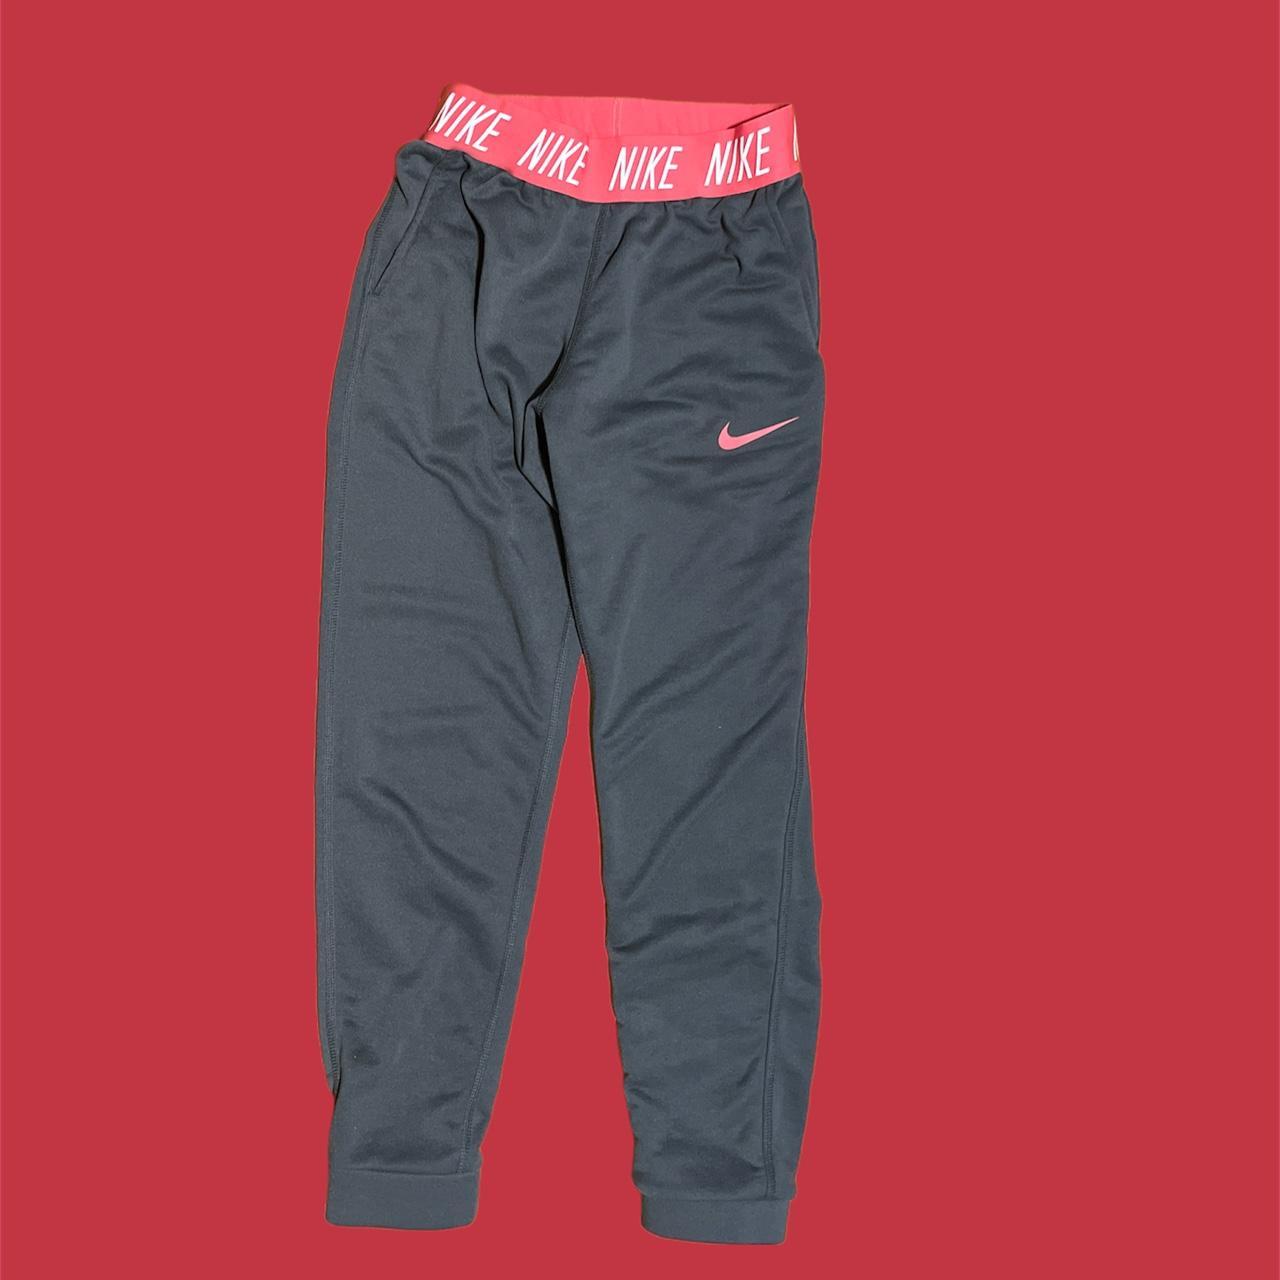 Nike women’s sweatpants pink, size L, #nike